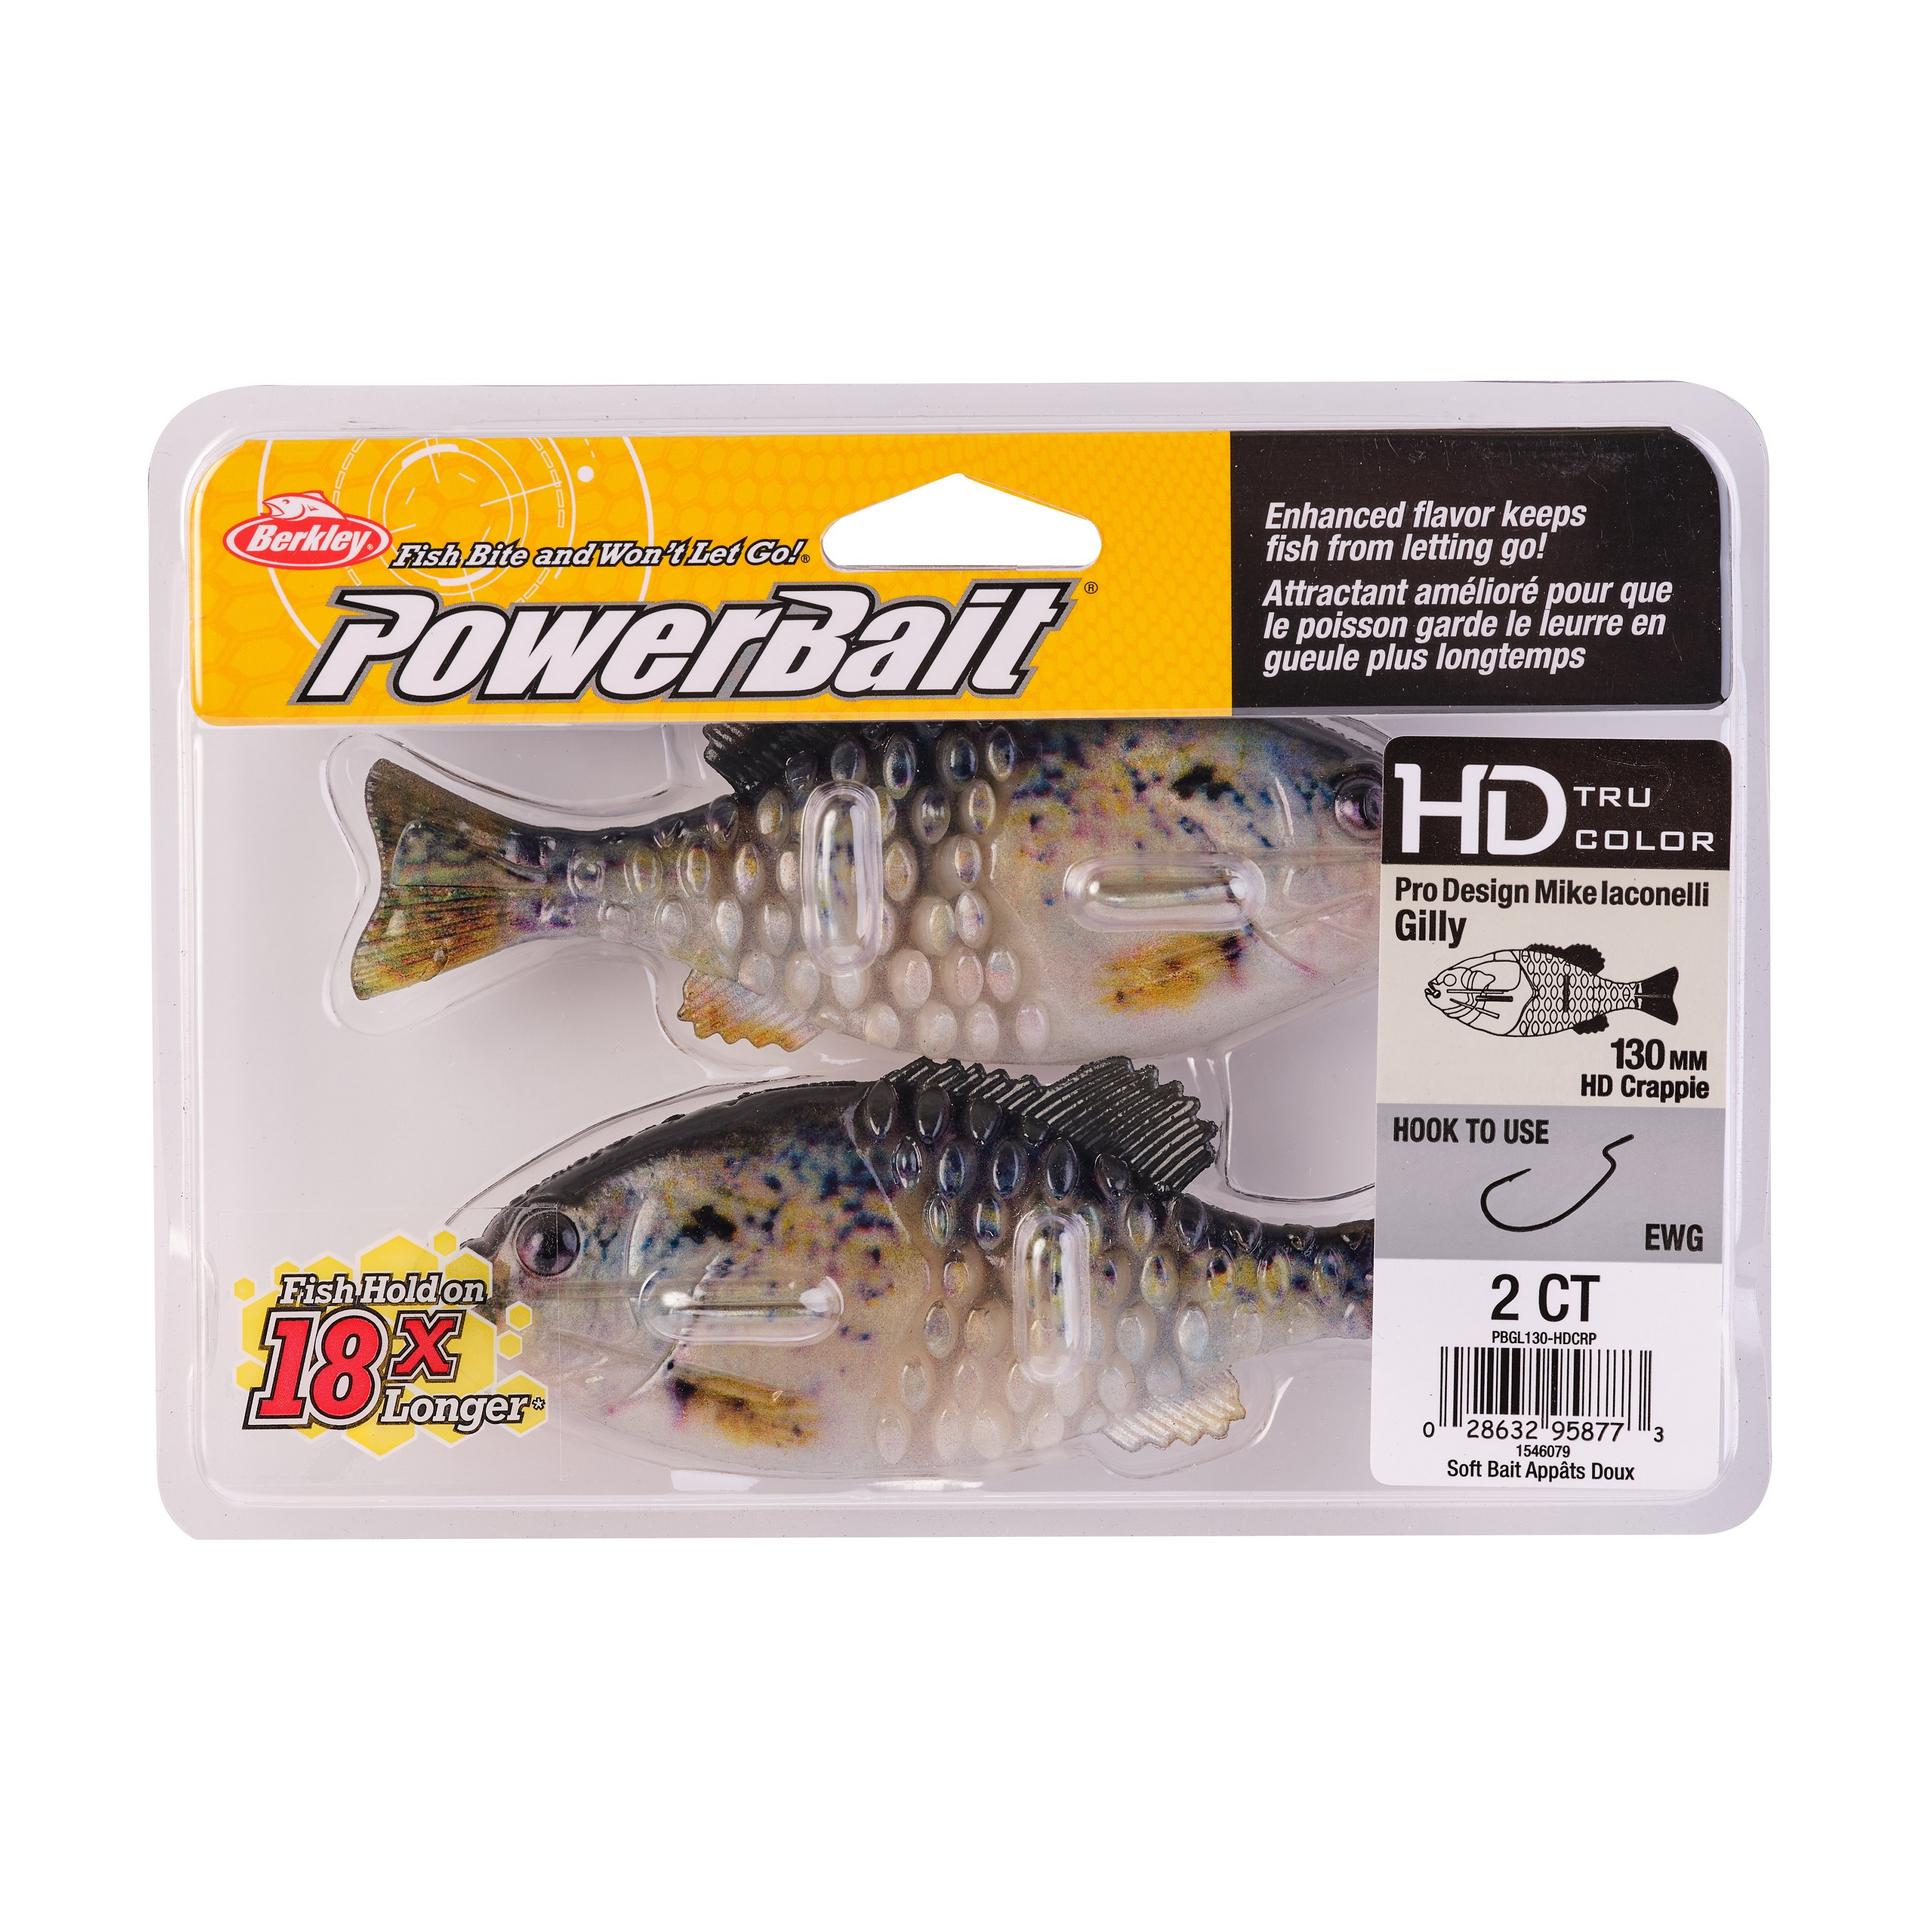 PowerBaitGilly HDCrappie 130mm PKG | Berkley Fishing